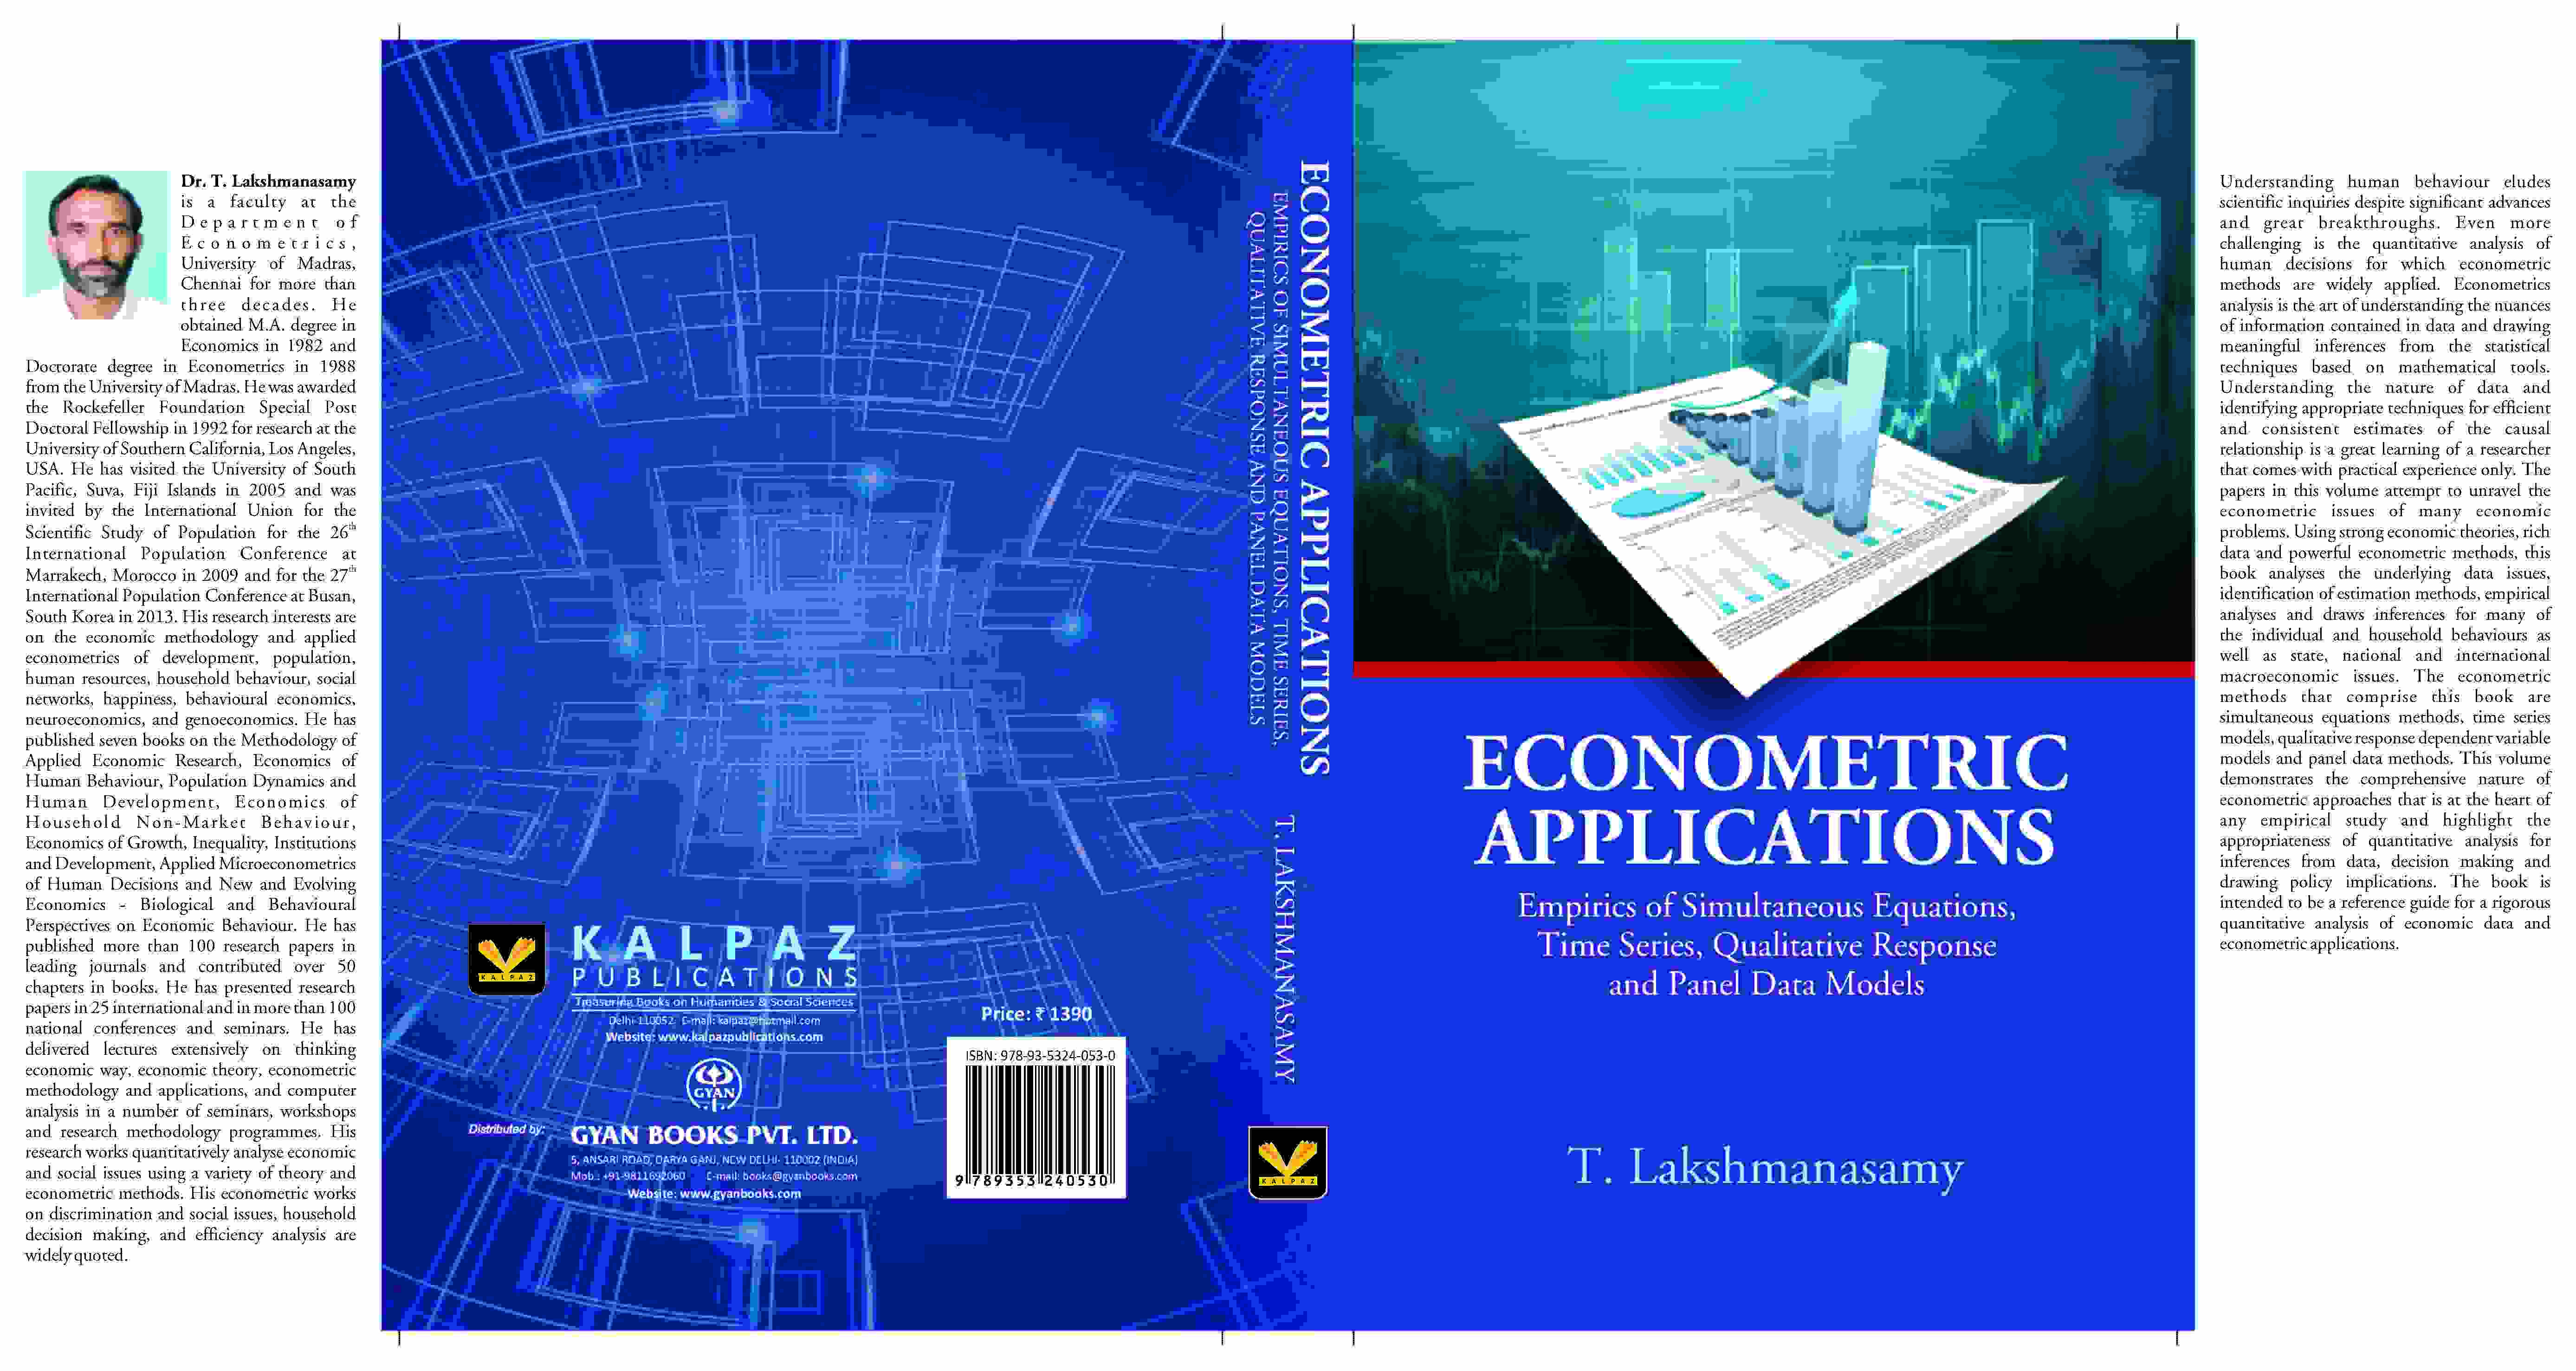 Econometric Applications: Empirics of Simultaneous Equations, Time Series, Qualitative Response And Panel Data Models